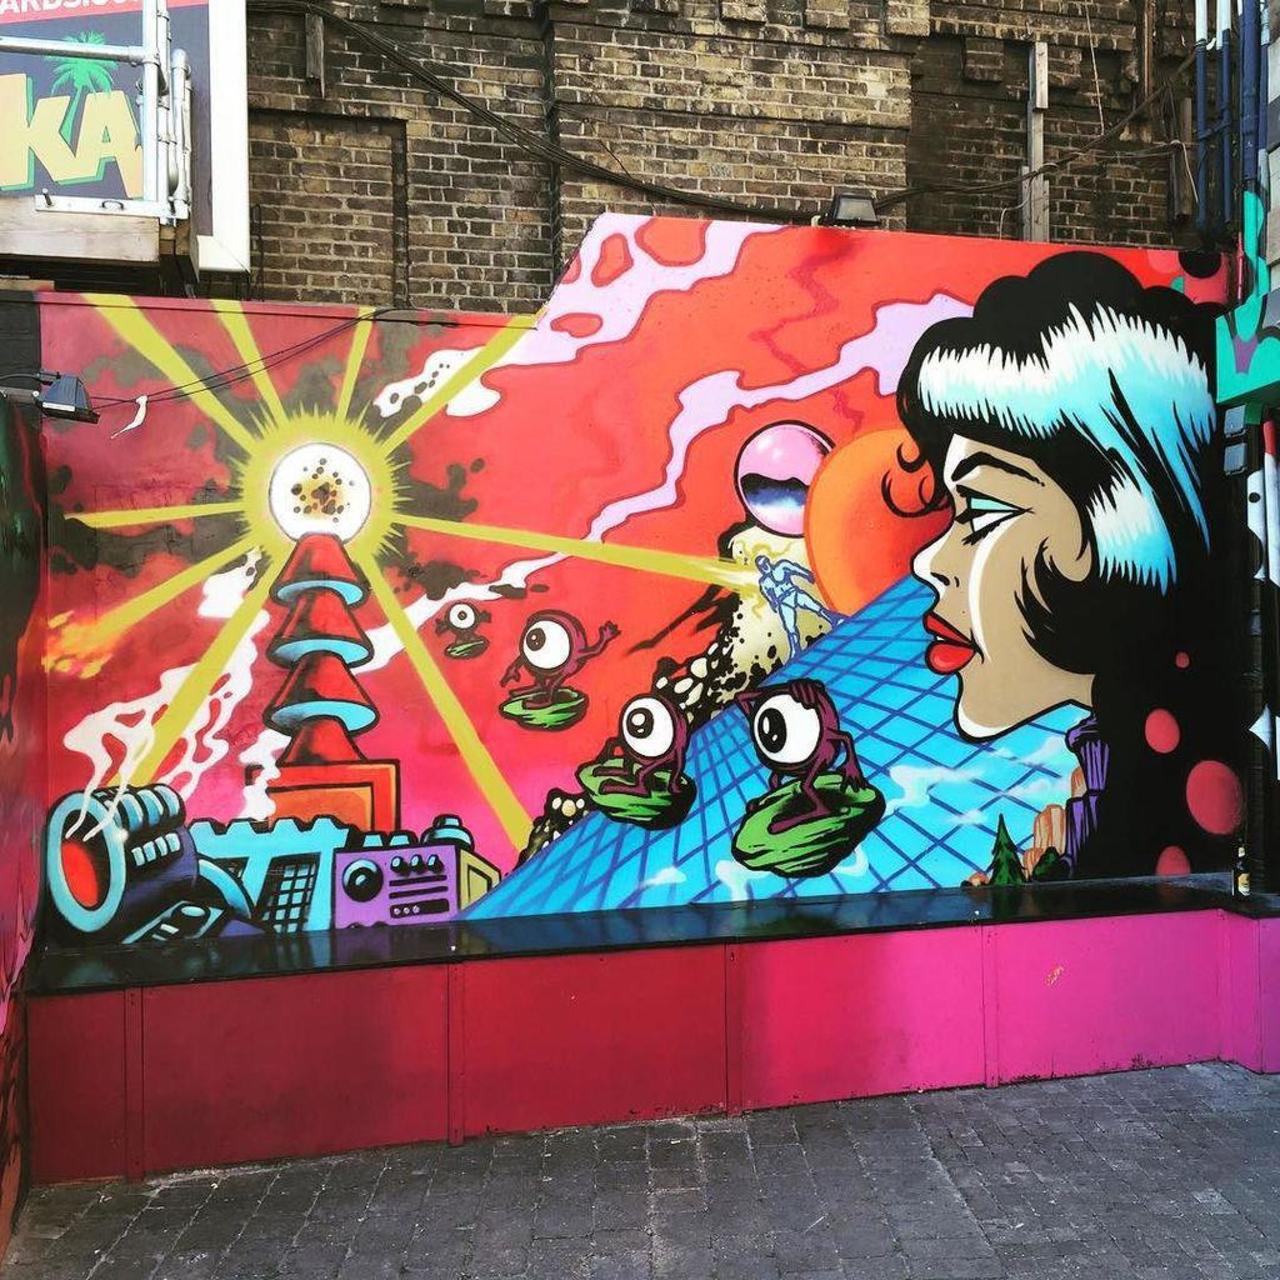 RT @StArtEverywhere: #London #brixton #brixtonvillage #londongrafiti #graffiti #StreetArt #streetartlondon #ldngraff #globalstreetart #u… http://t.co/jr3at6mRAy